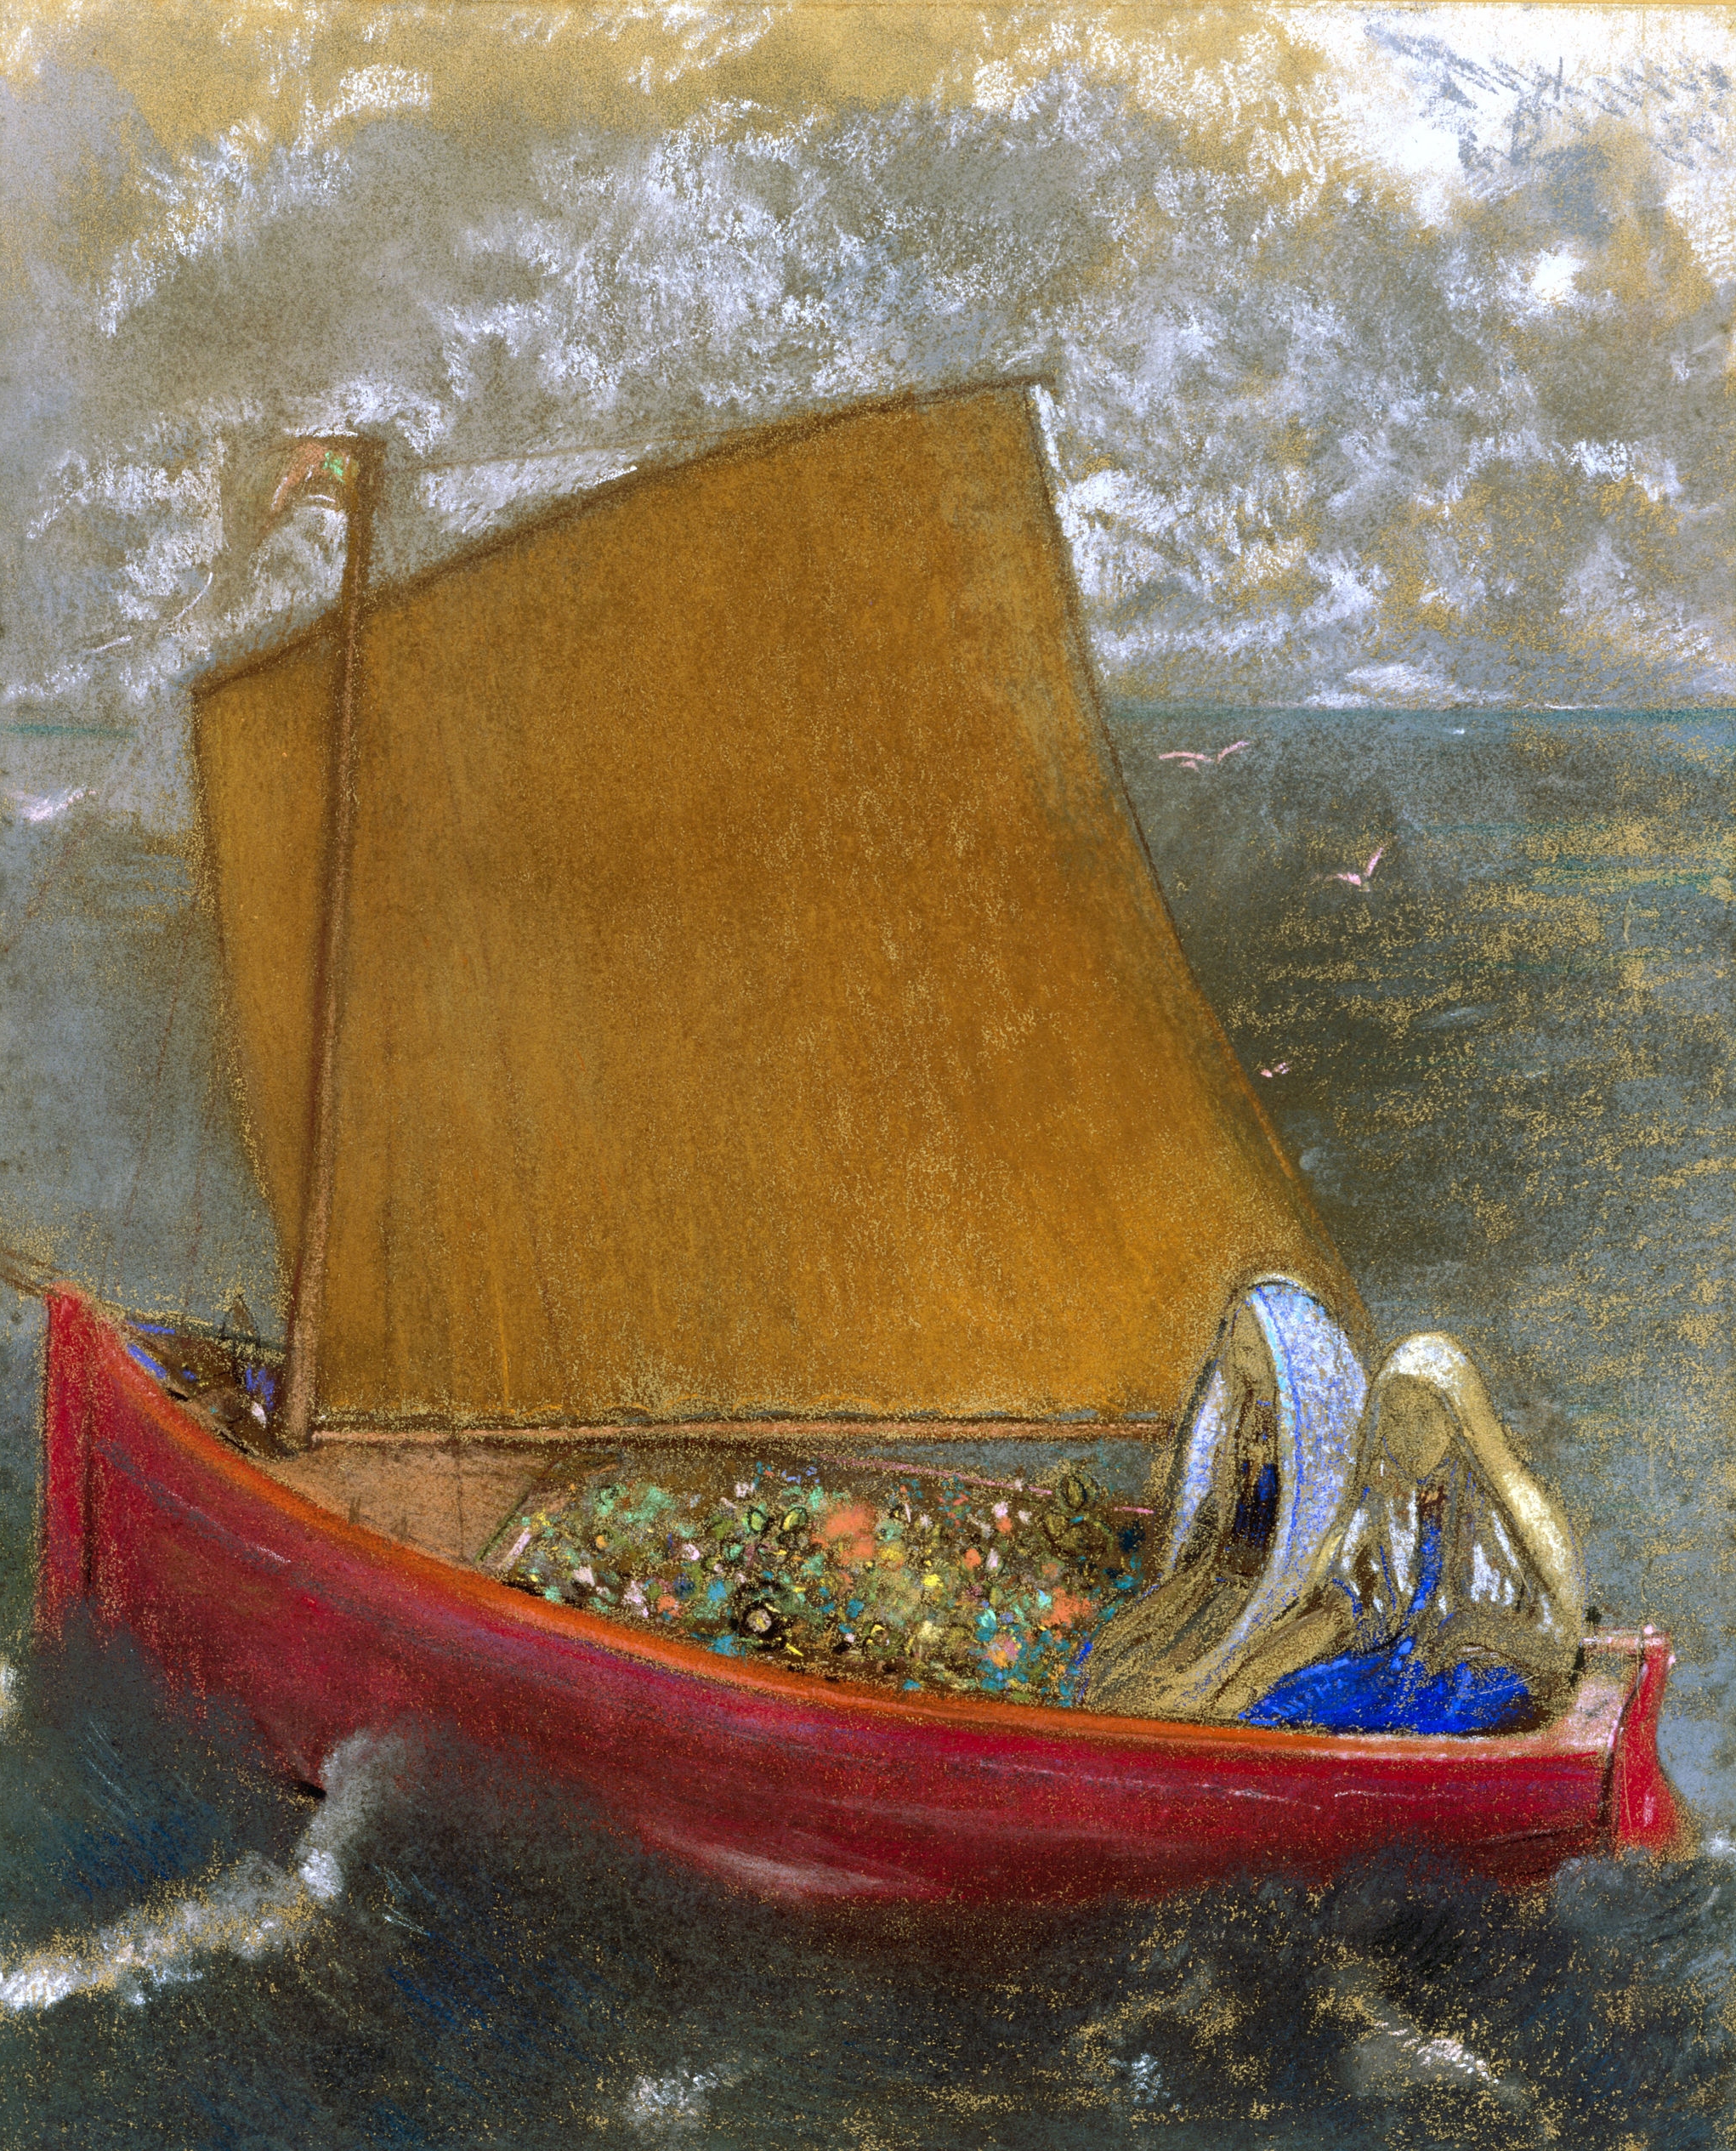 Le Navire Jaune by Odilon Redon - 1905 